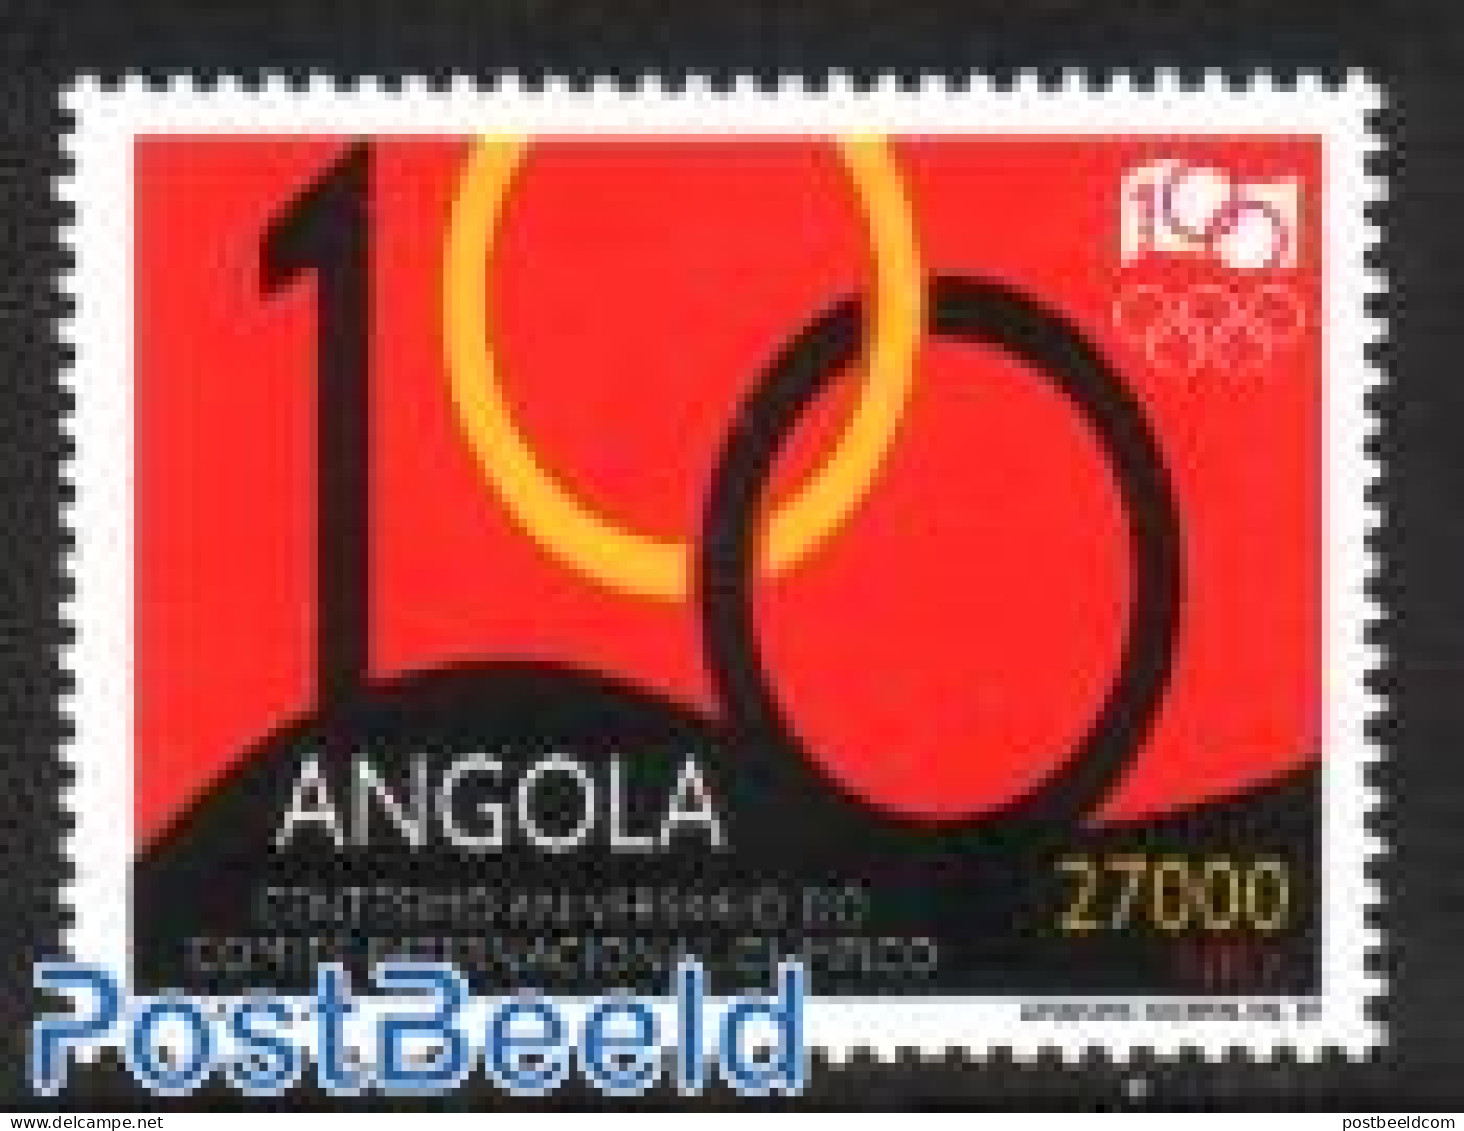 Angola 1994 IOC Centenary 1v, Mint NH, Sport - Olympic Games - Angola